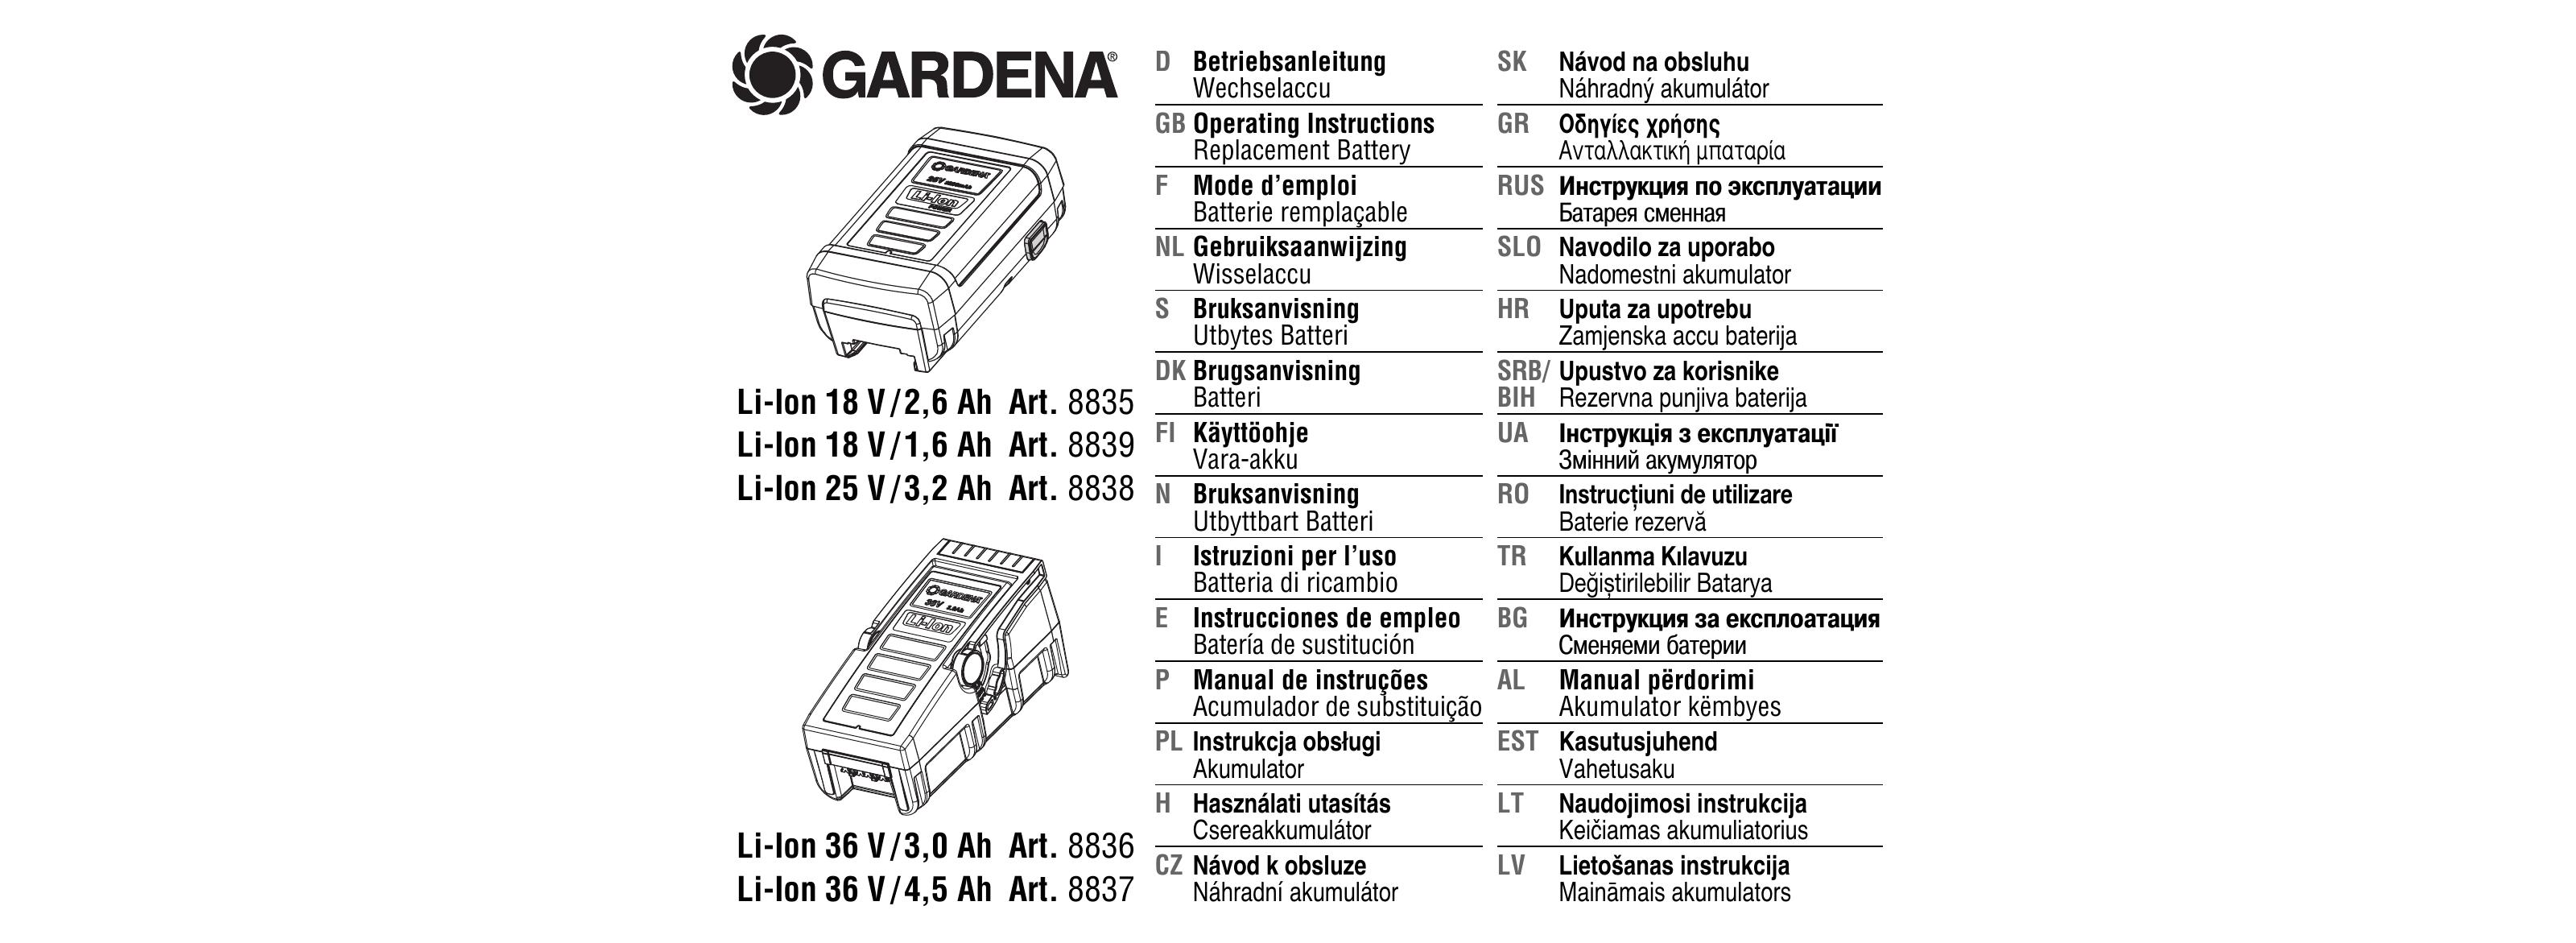 Gardena 6835 Marine Battery User Manual